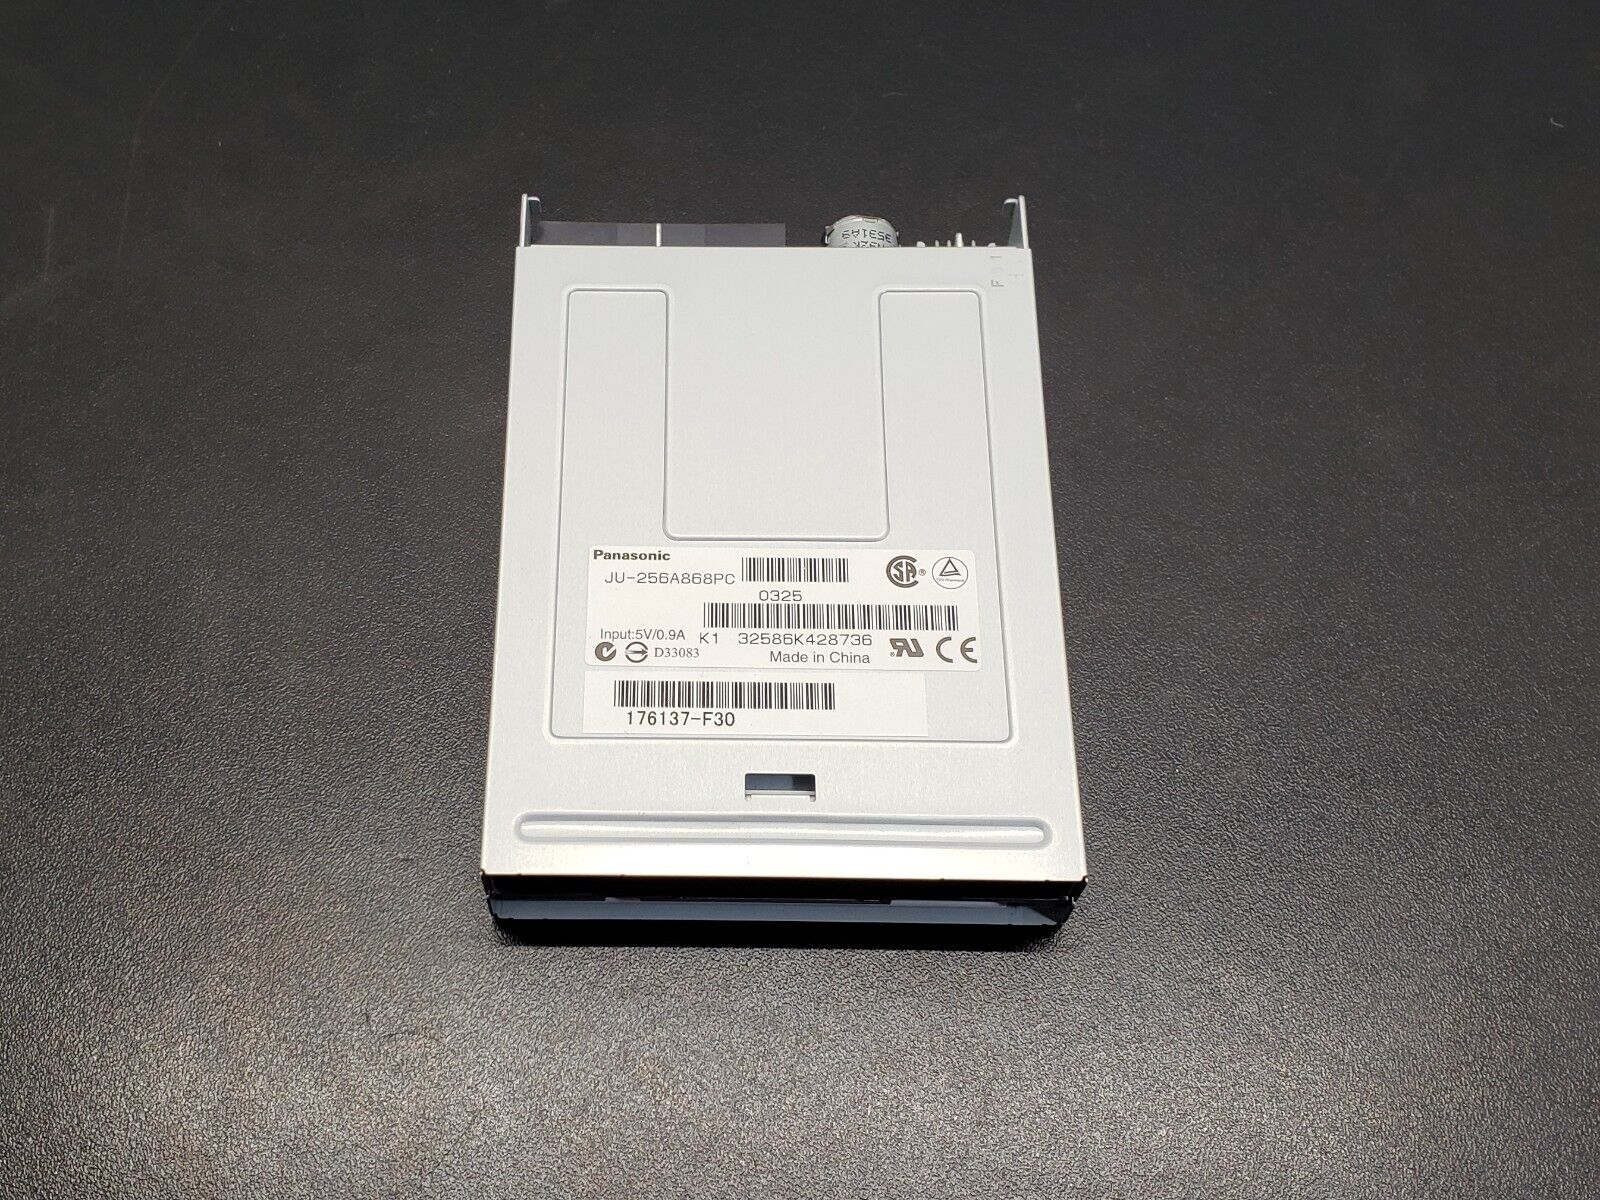 Compaq DF213A Presario S4000NX Floppy Disc Drive Panasonic JU-256A868PC